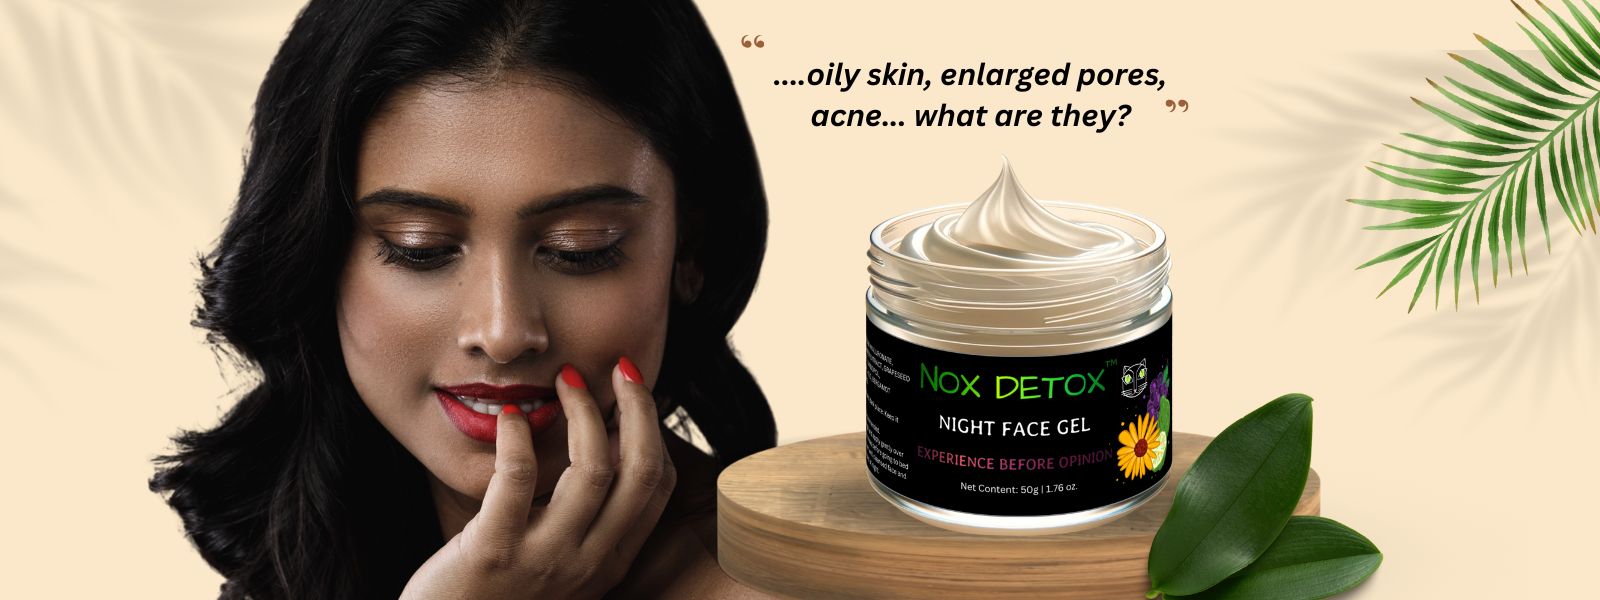 Night face gel for oily acne prone skin